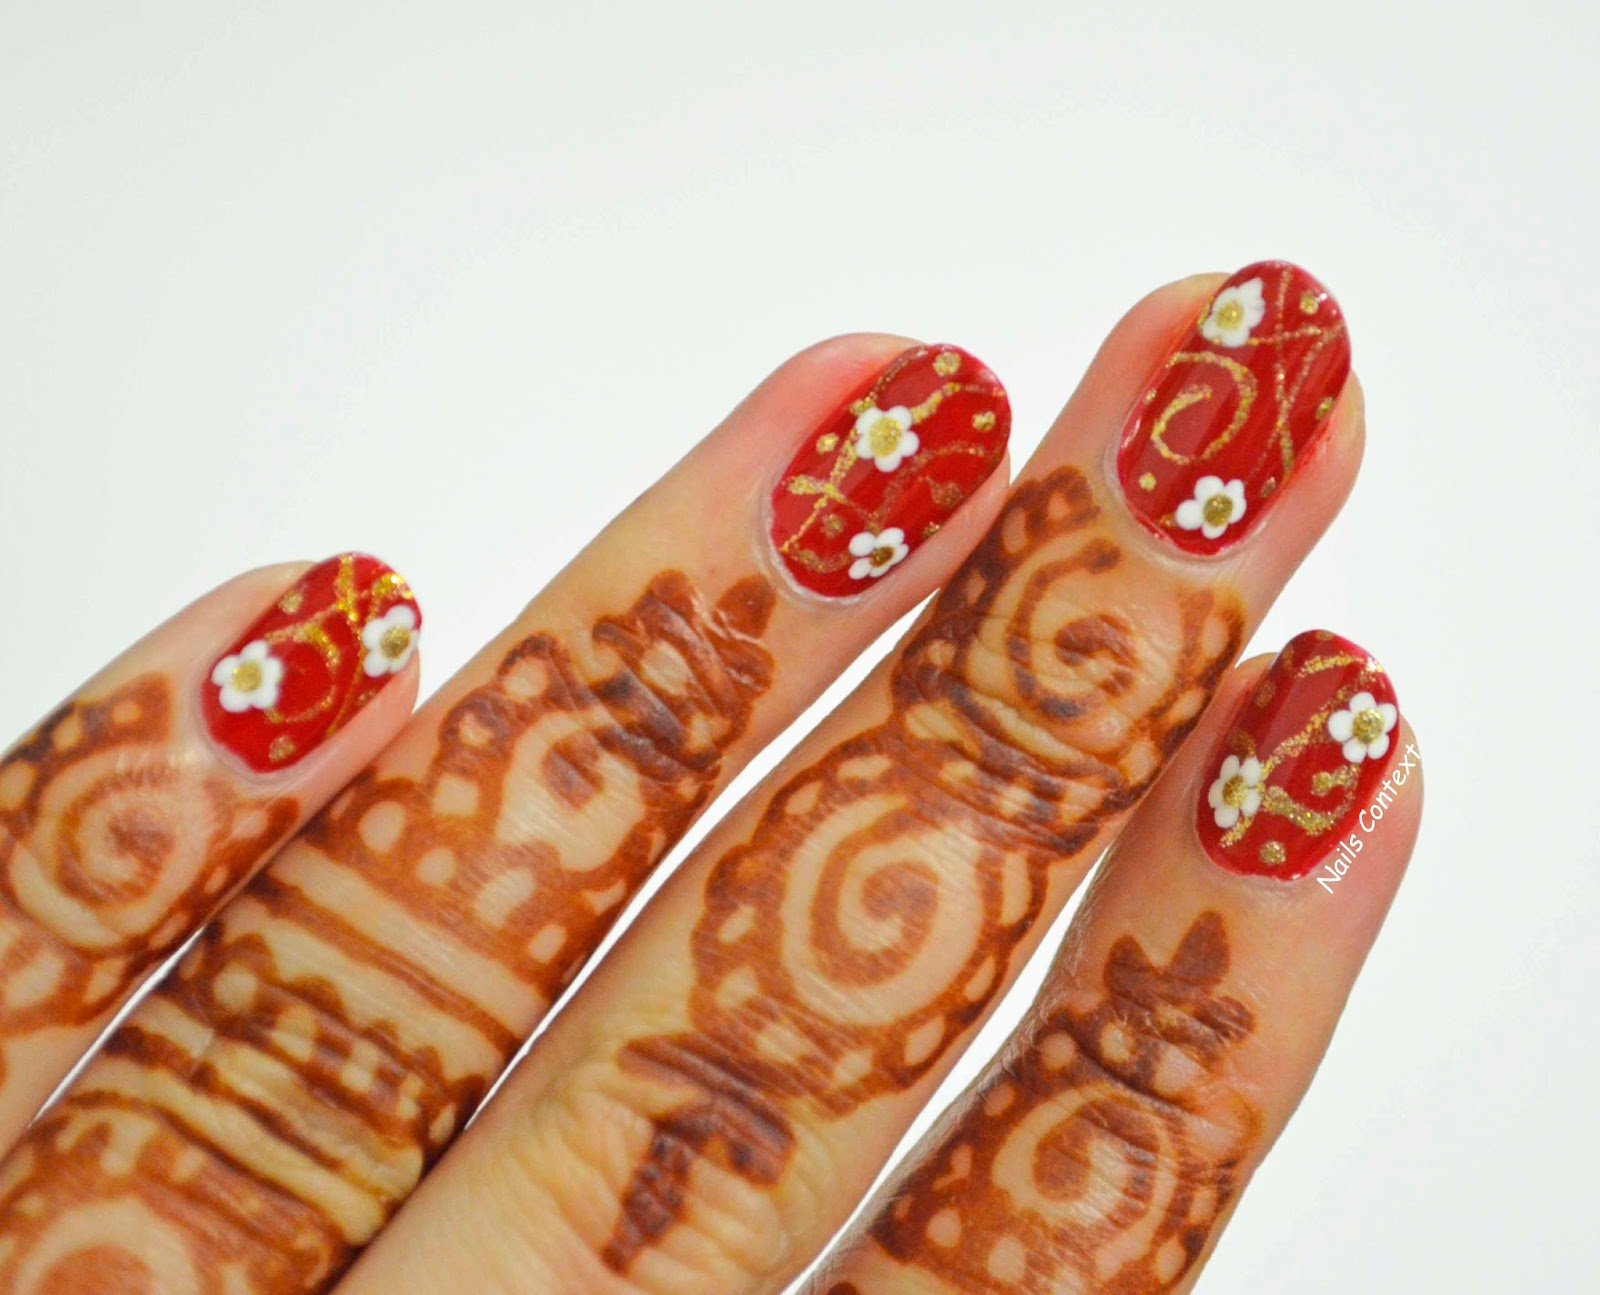 Rajasthan Dreams Red and Gold Indian Wedding Press on Nails Indian Bridal  Makeup Nails Mehndi Henna Nails Red Bejeweled Nails - Etsy